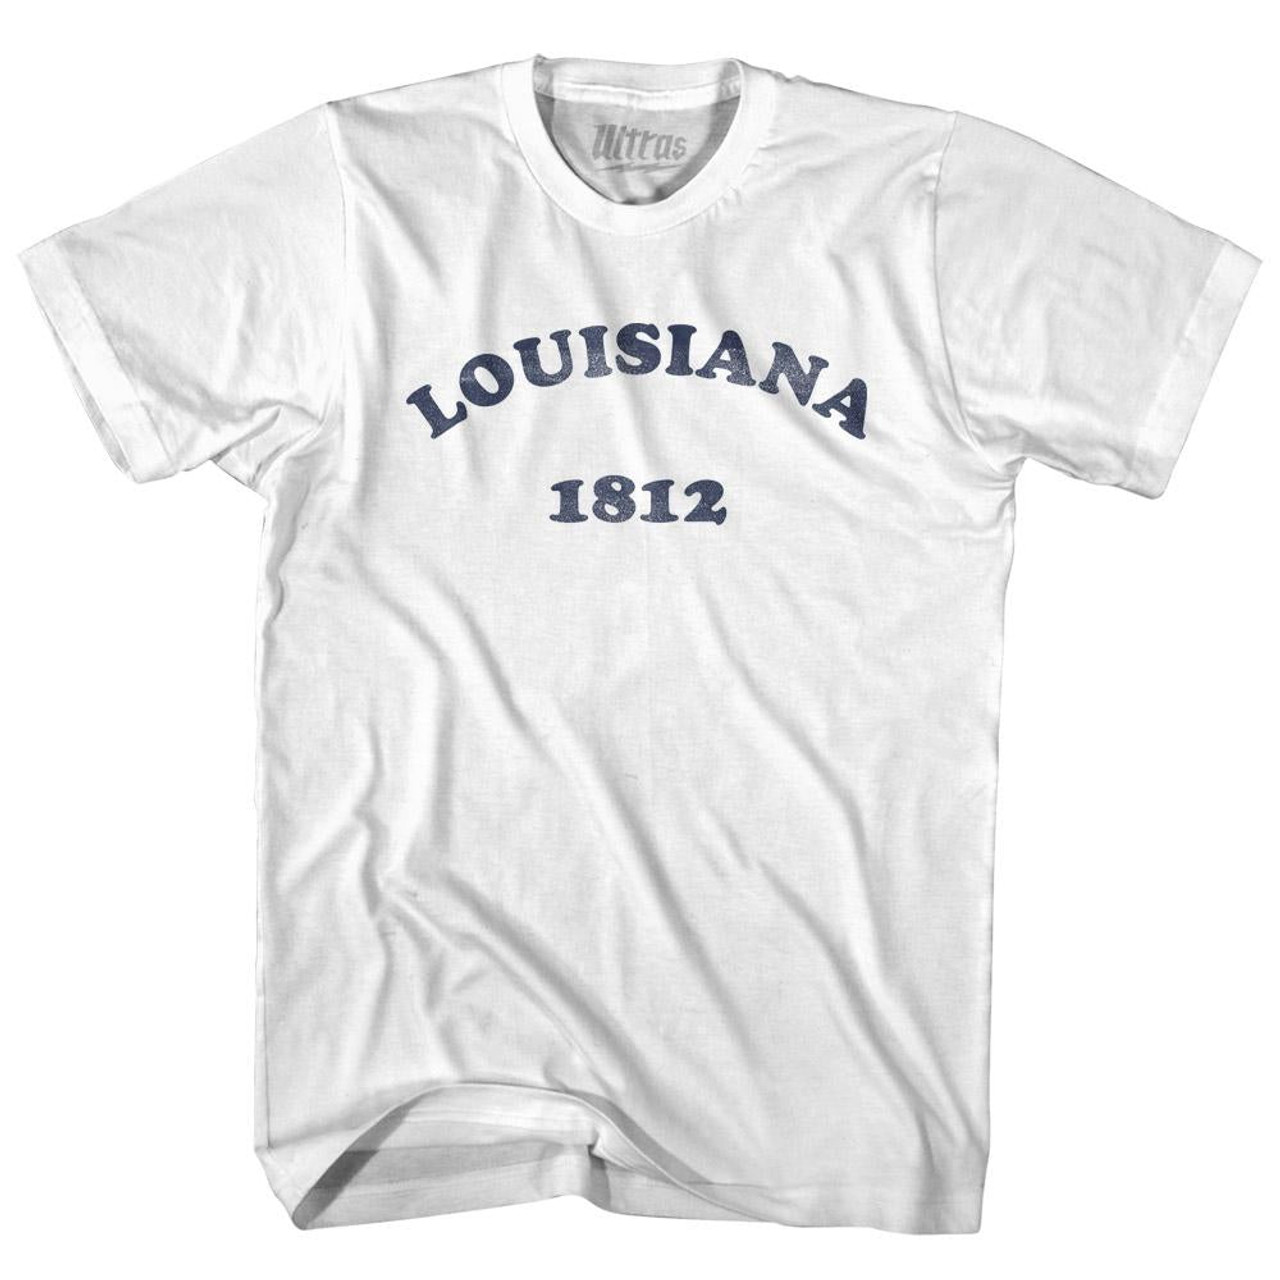 Louisiana State 1812 Youth Cotton Vintage T-Shirt - White